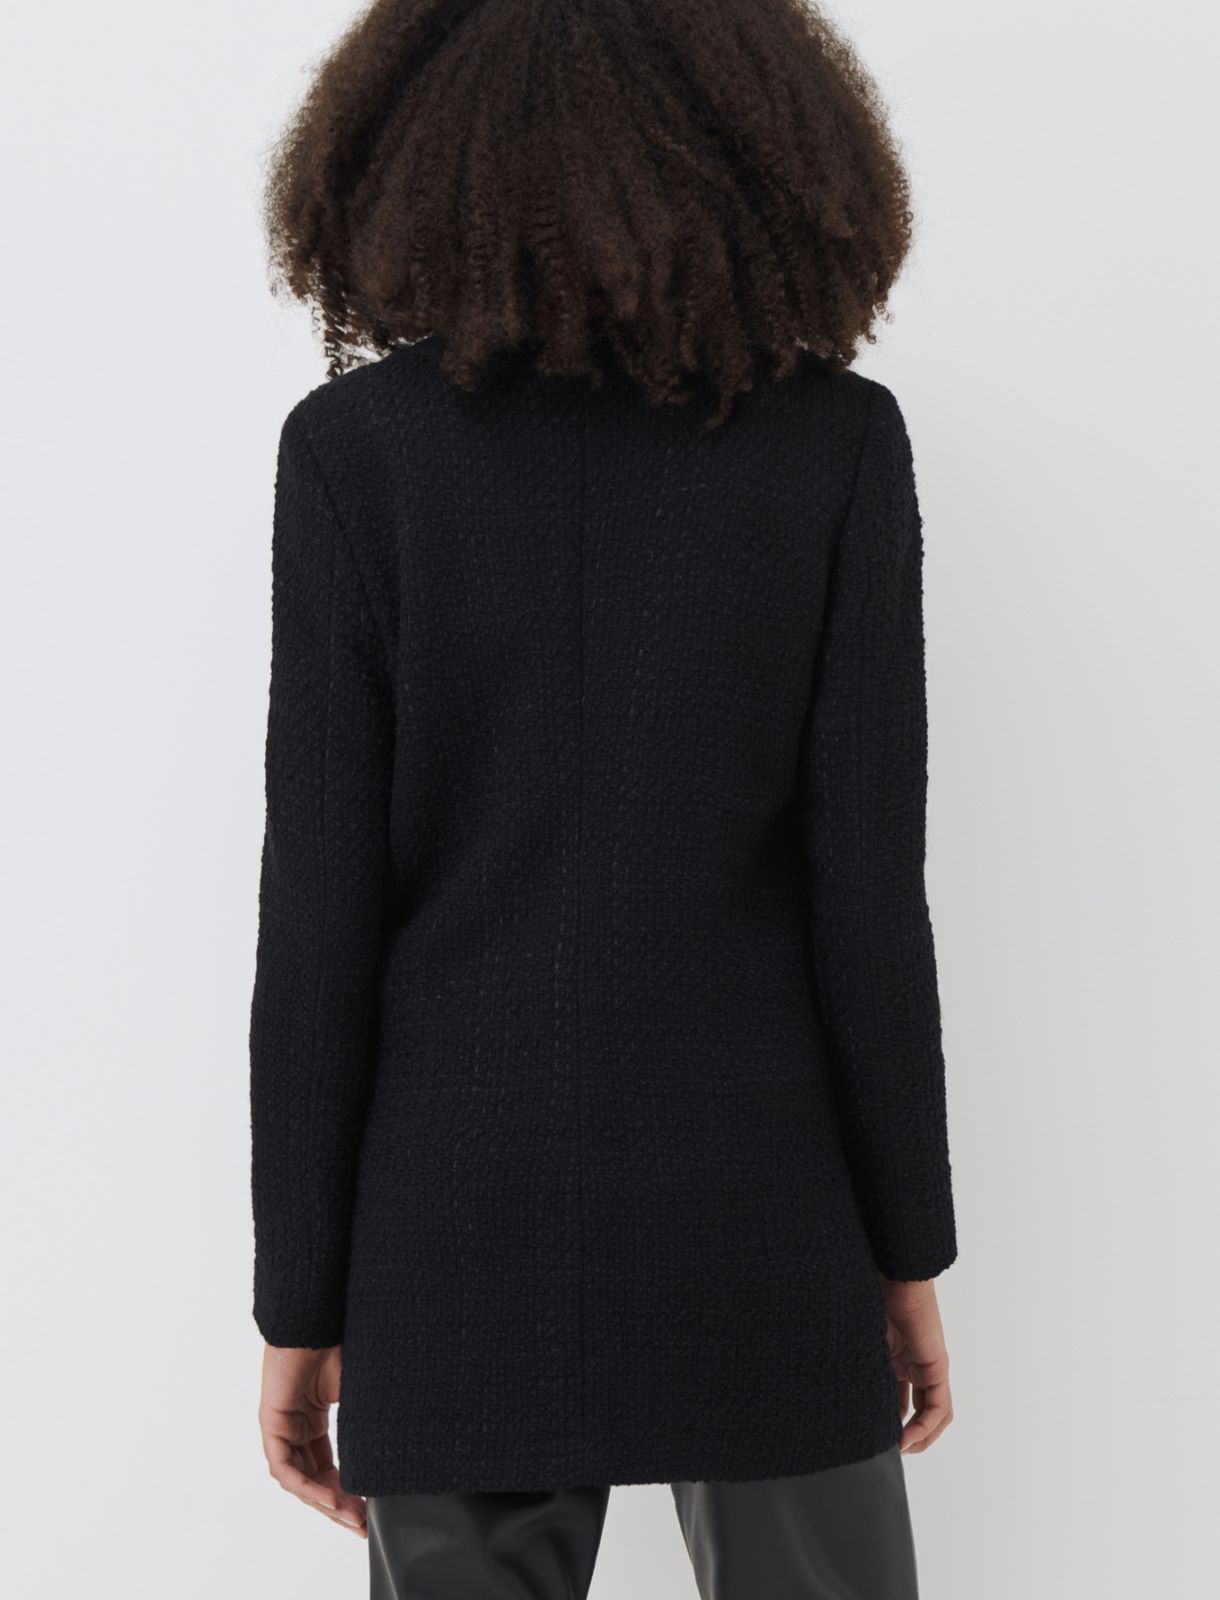 Tweed jacket - Black - Marella - 2